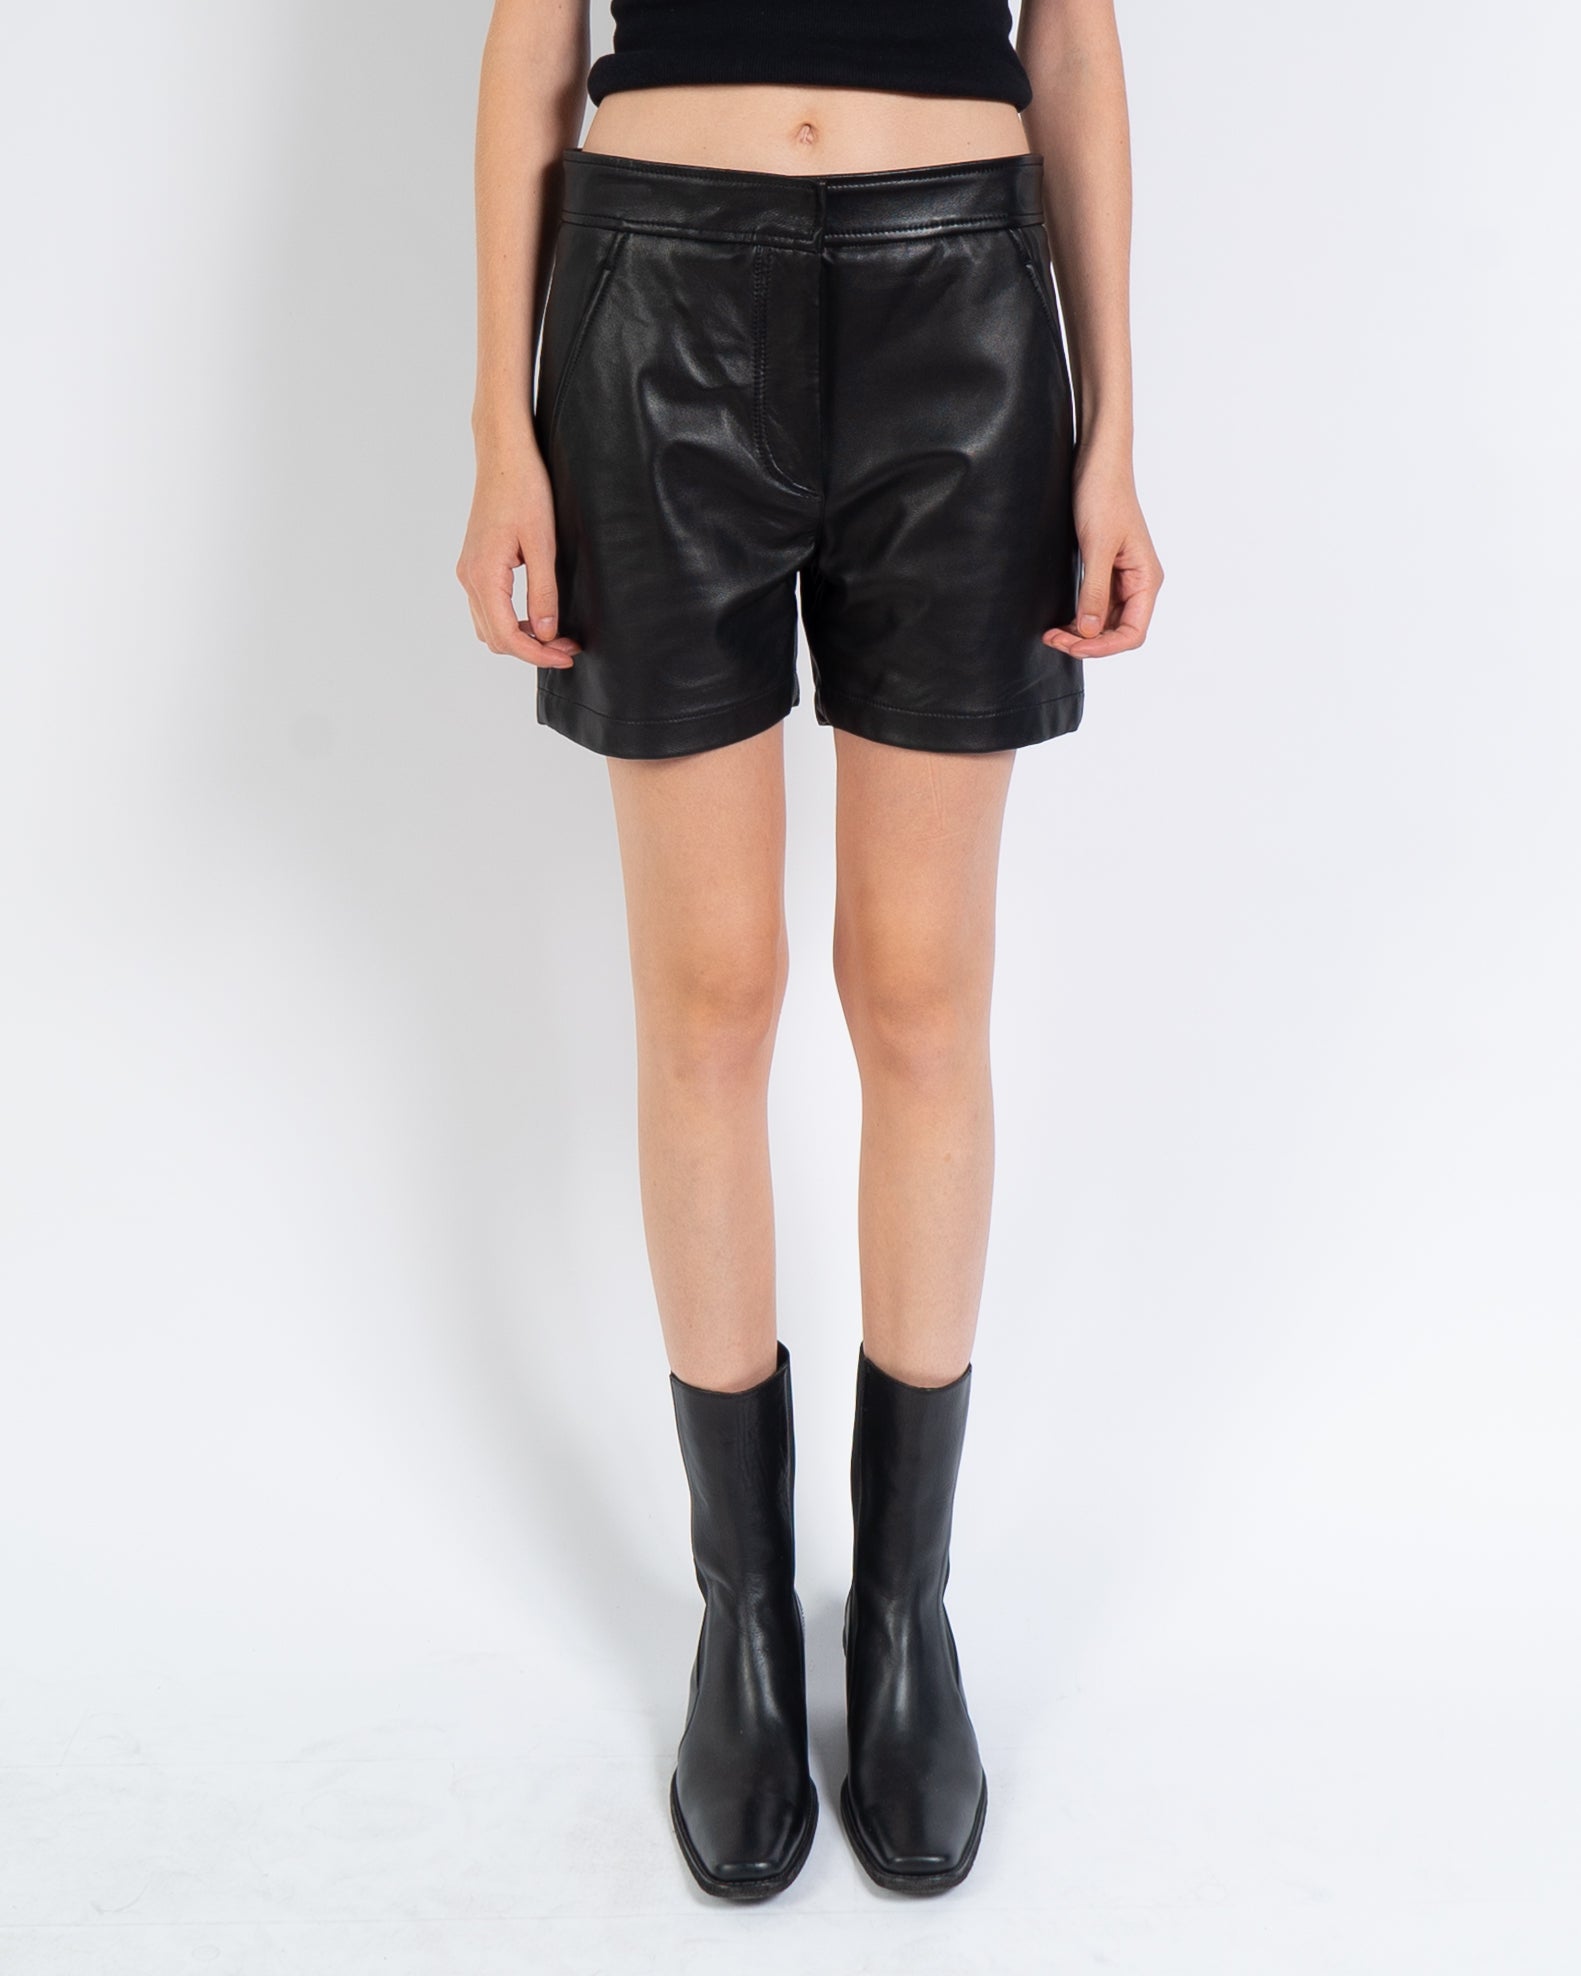 SS20 Miza Black Leather Shorts